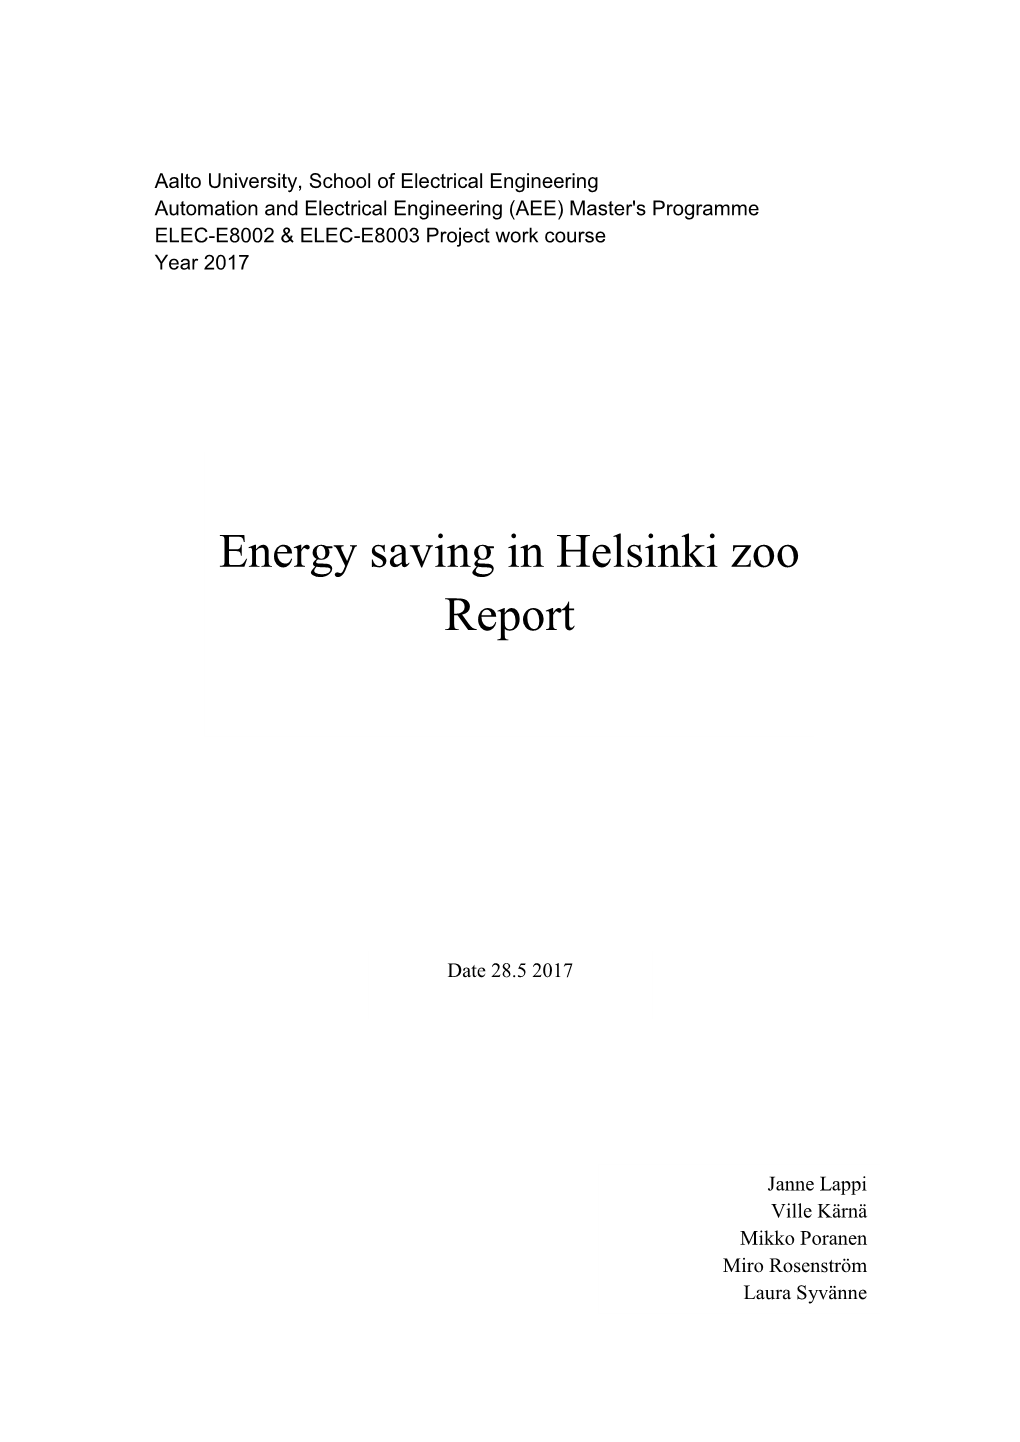 Energy Saving in Helsinki Zoo Report